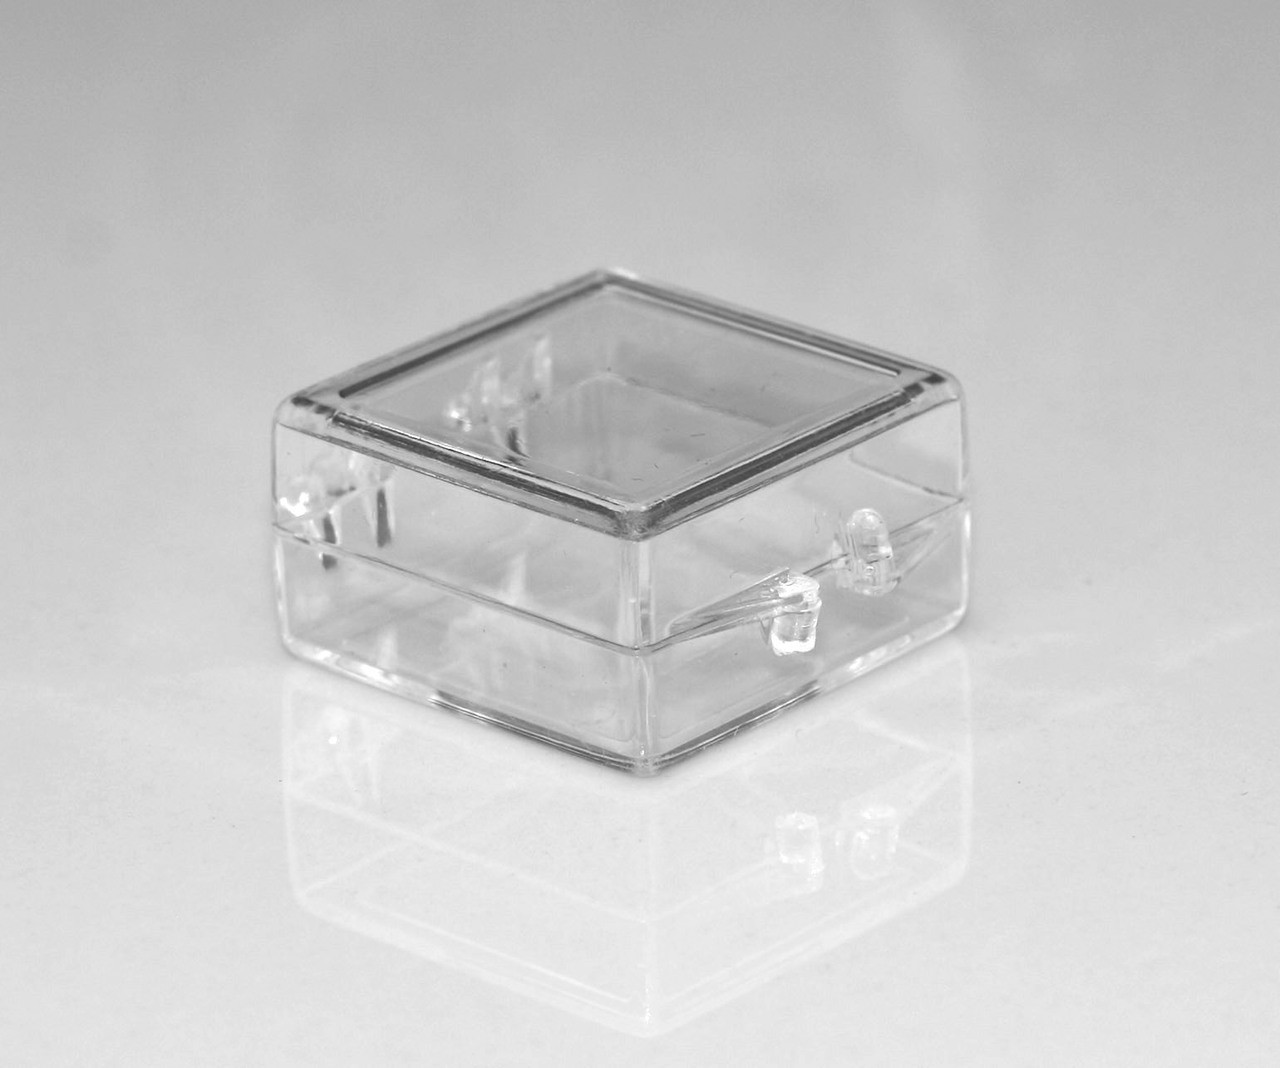 Acrylic Square Hinged-Lid Box